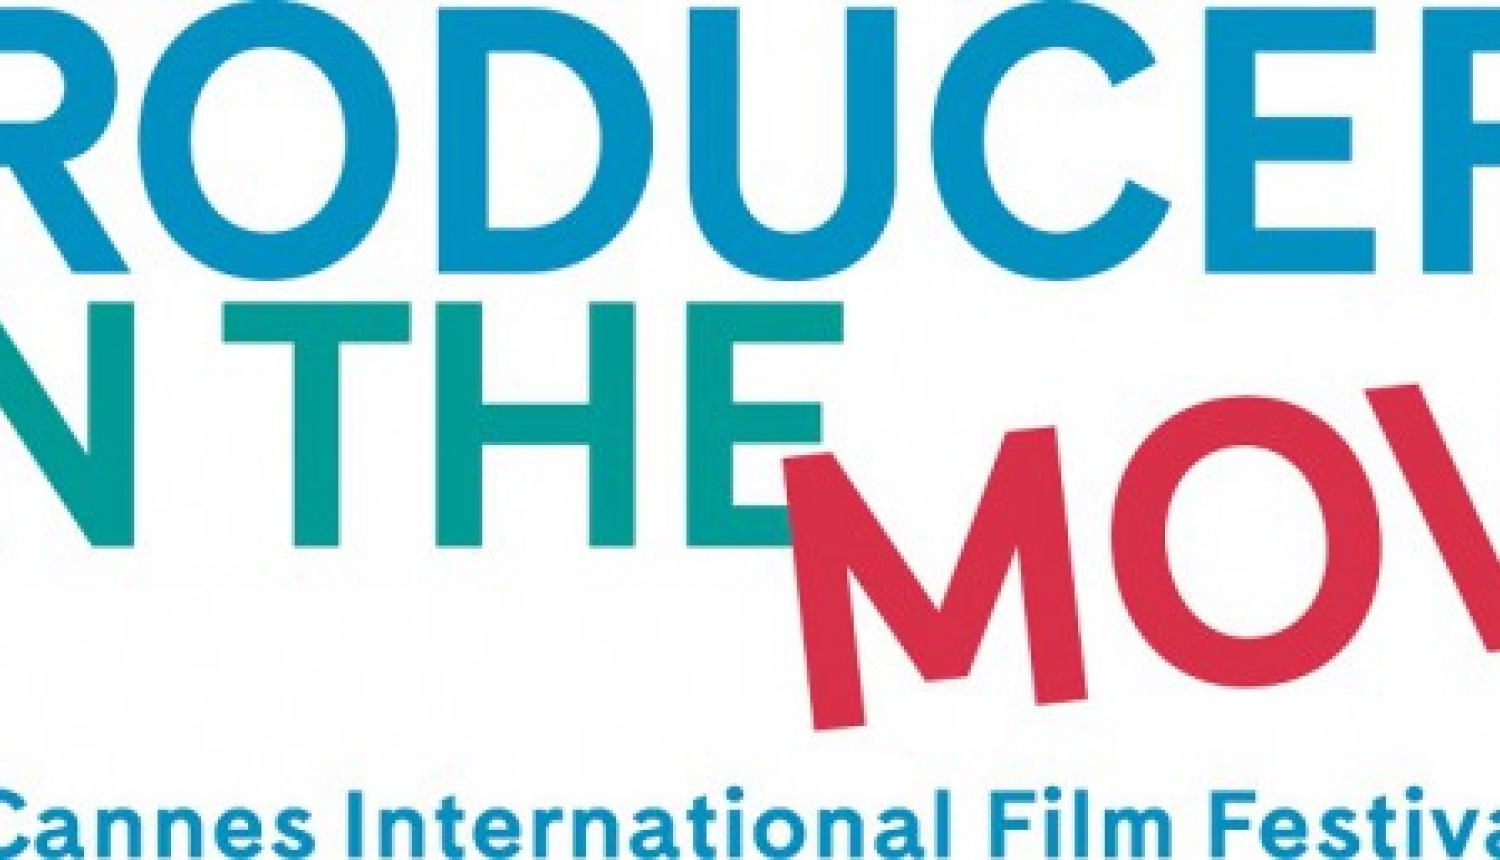 Gints Grūbe iekļauts “Producers on the Move” izlasē Kannās